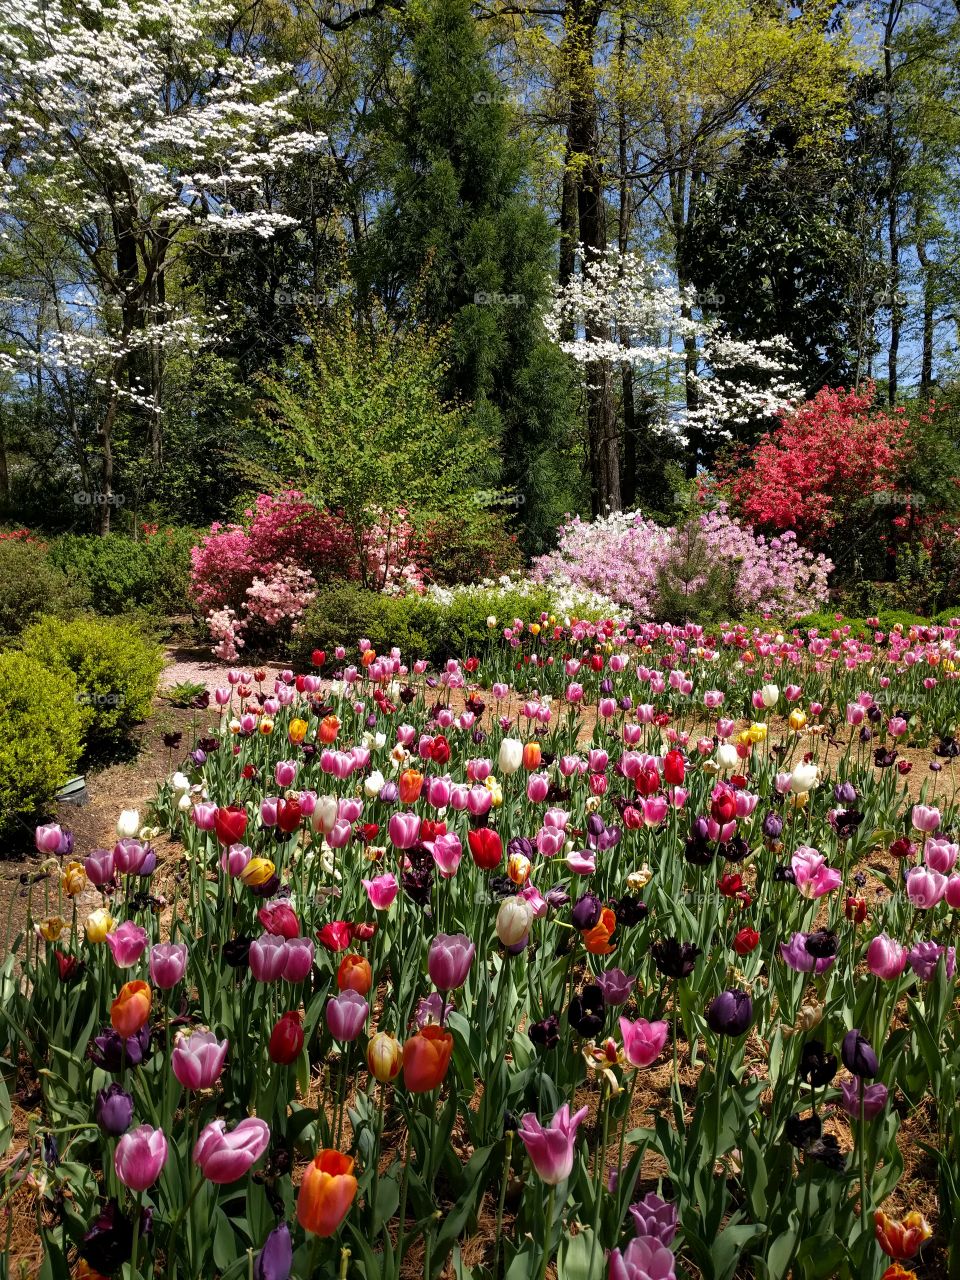 paths through the tulips with azaleas behind them, Dixon gardens, Memphis, TN, spring 2016